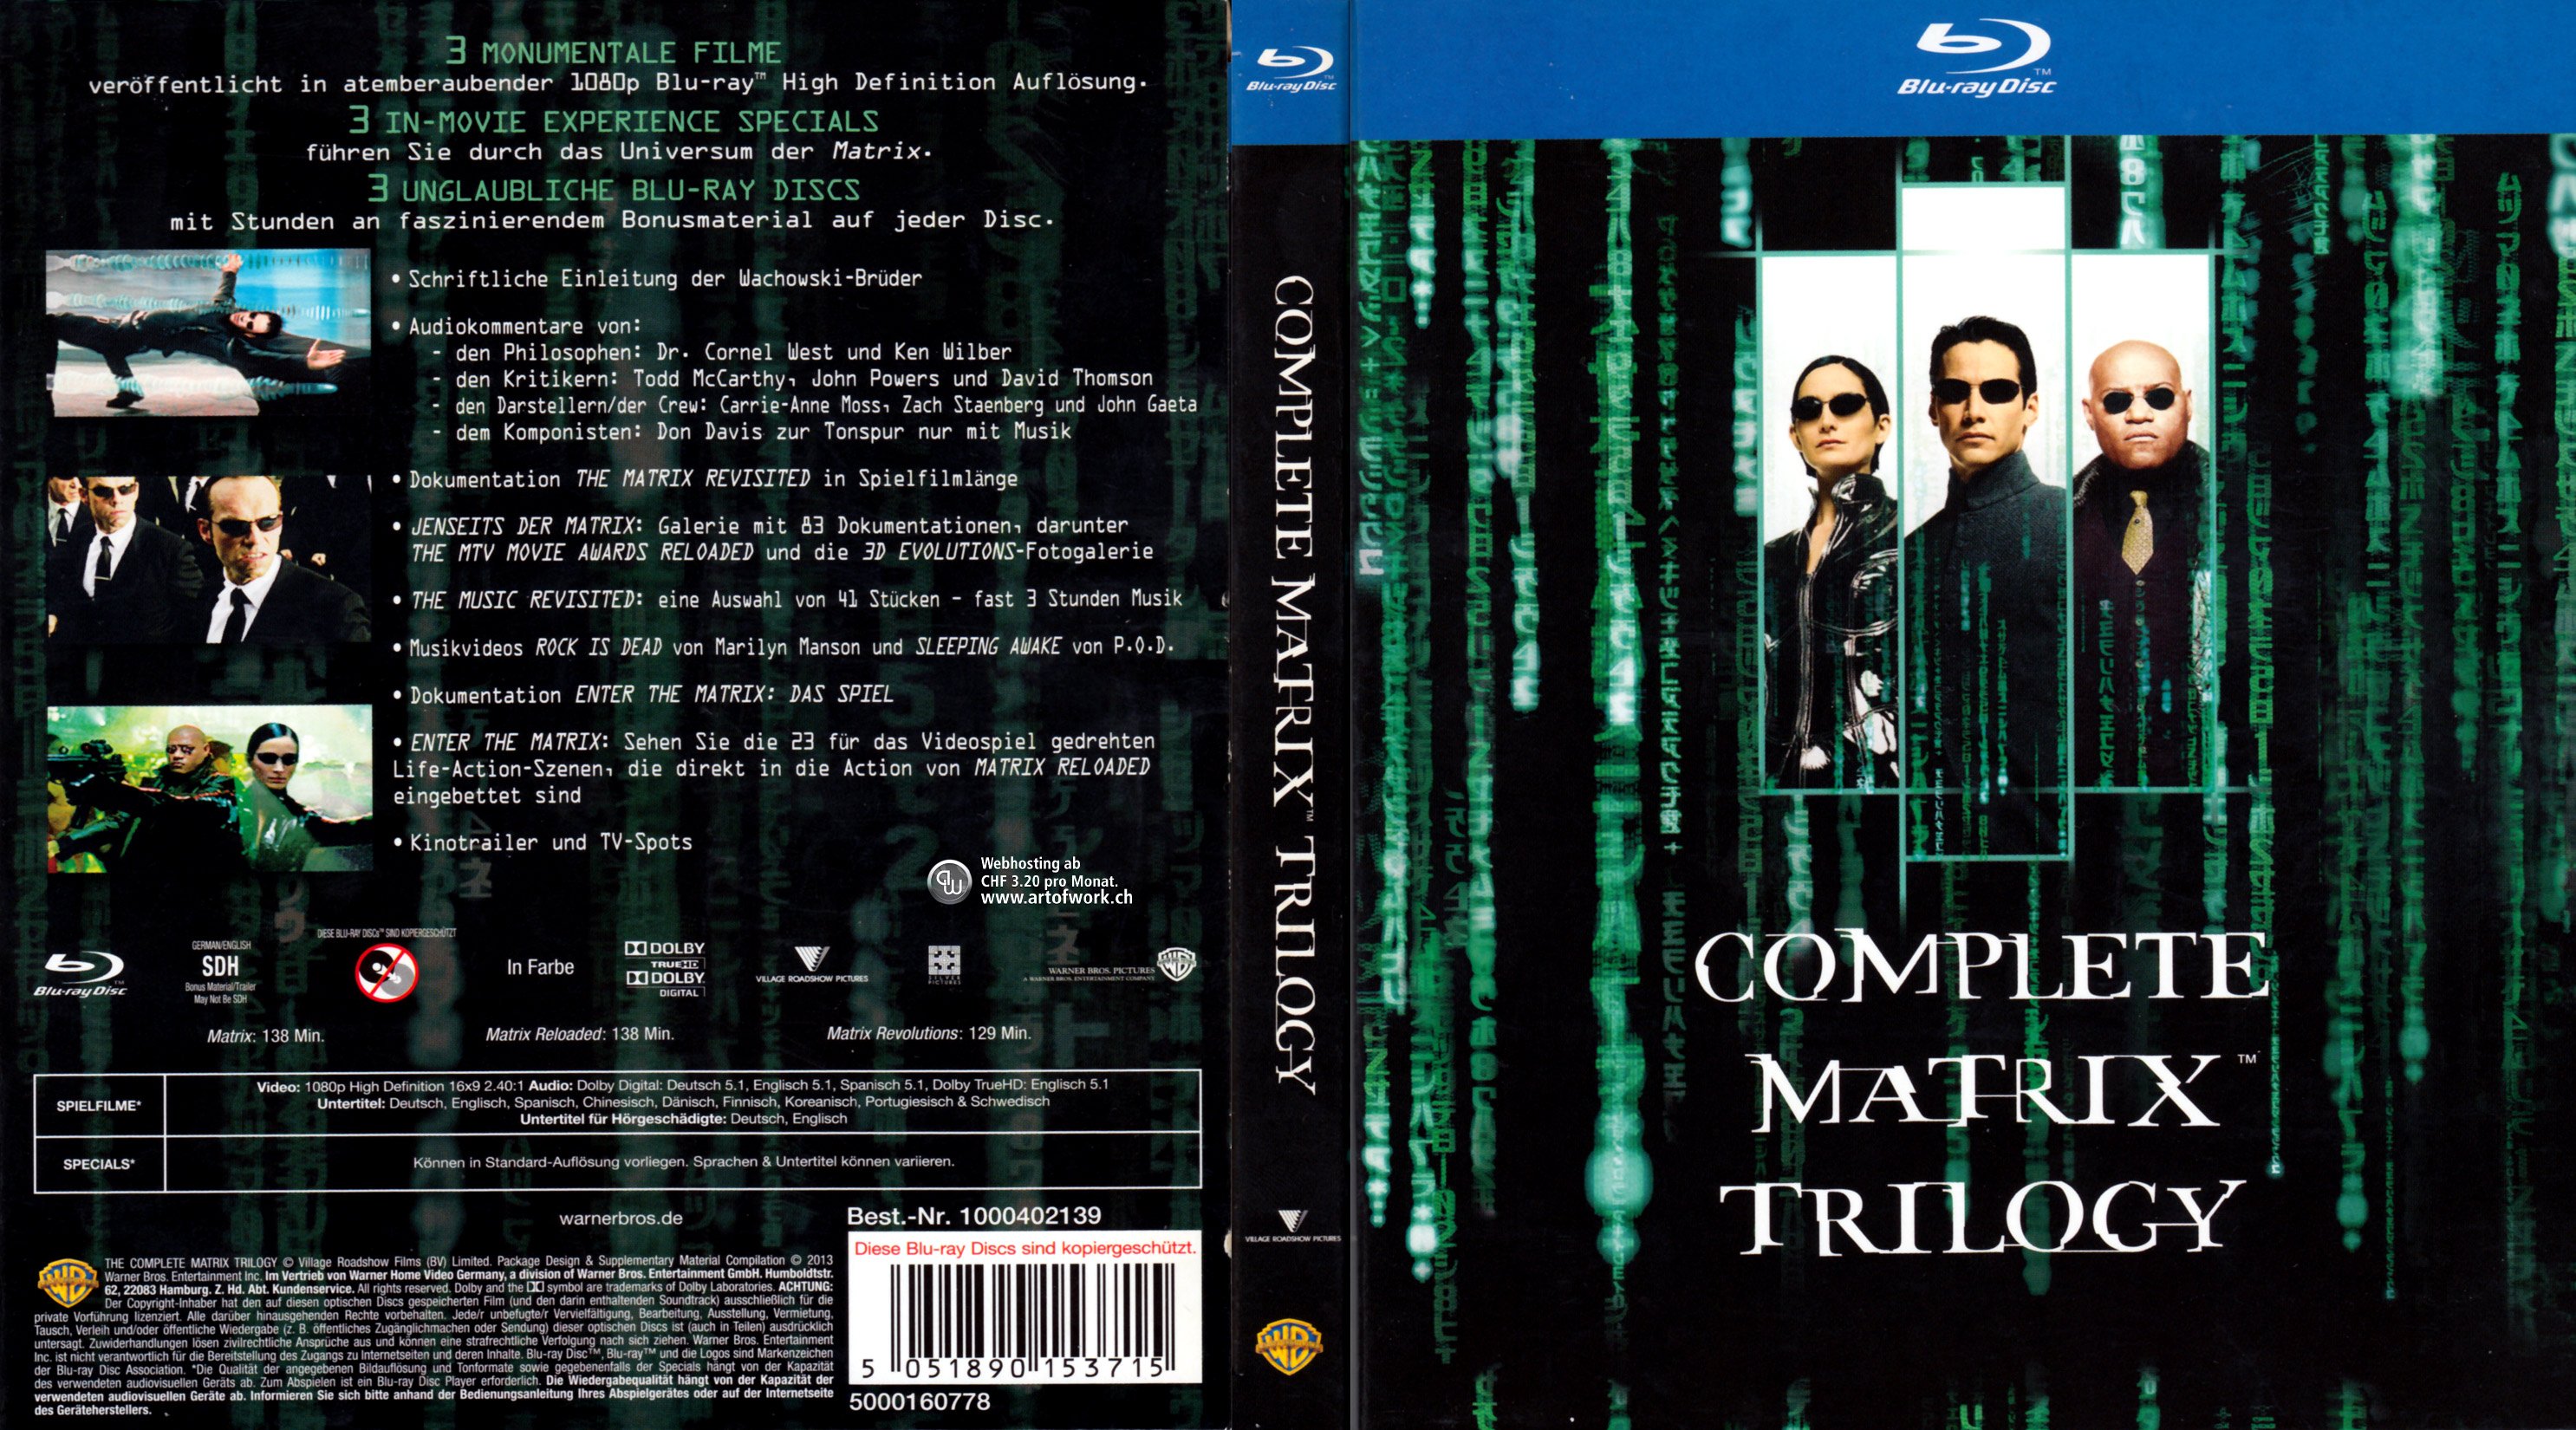 Matrix Trilogie german blu ray cover | German DVD Covers2972 x 1650